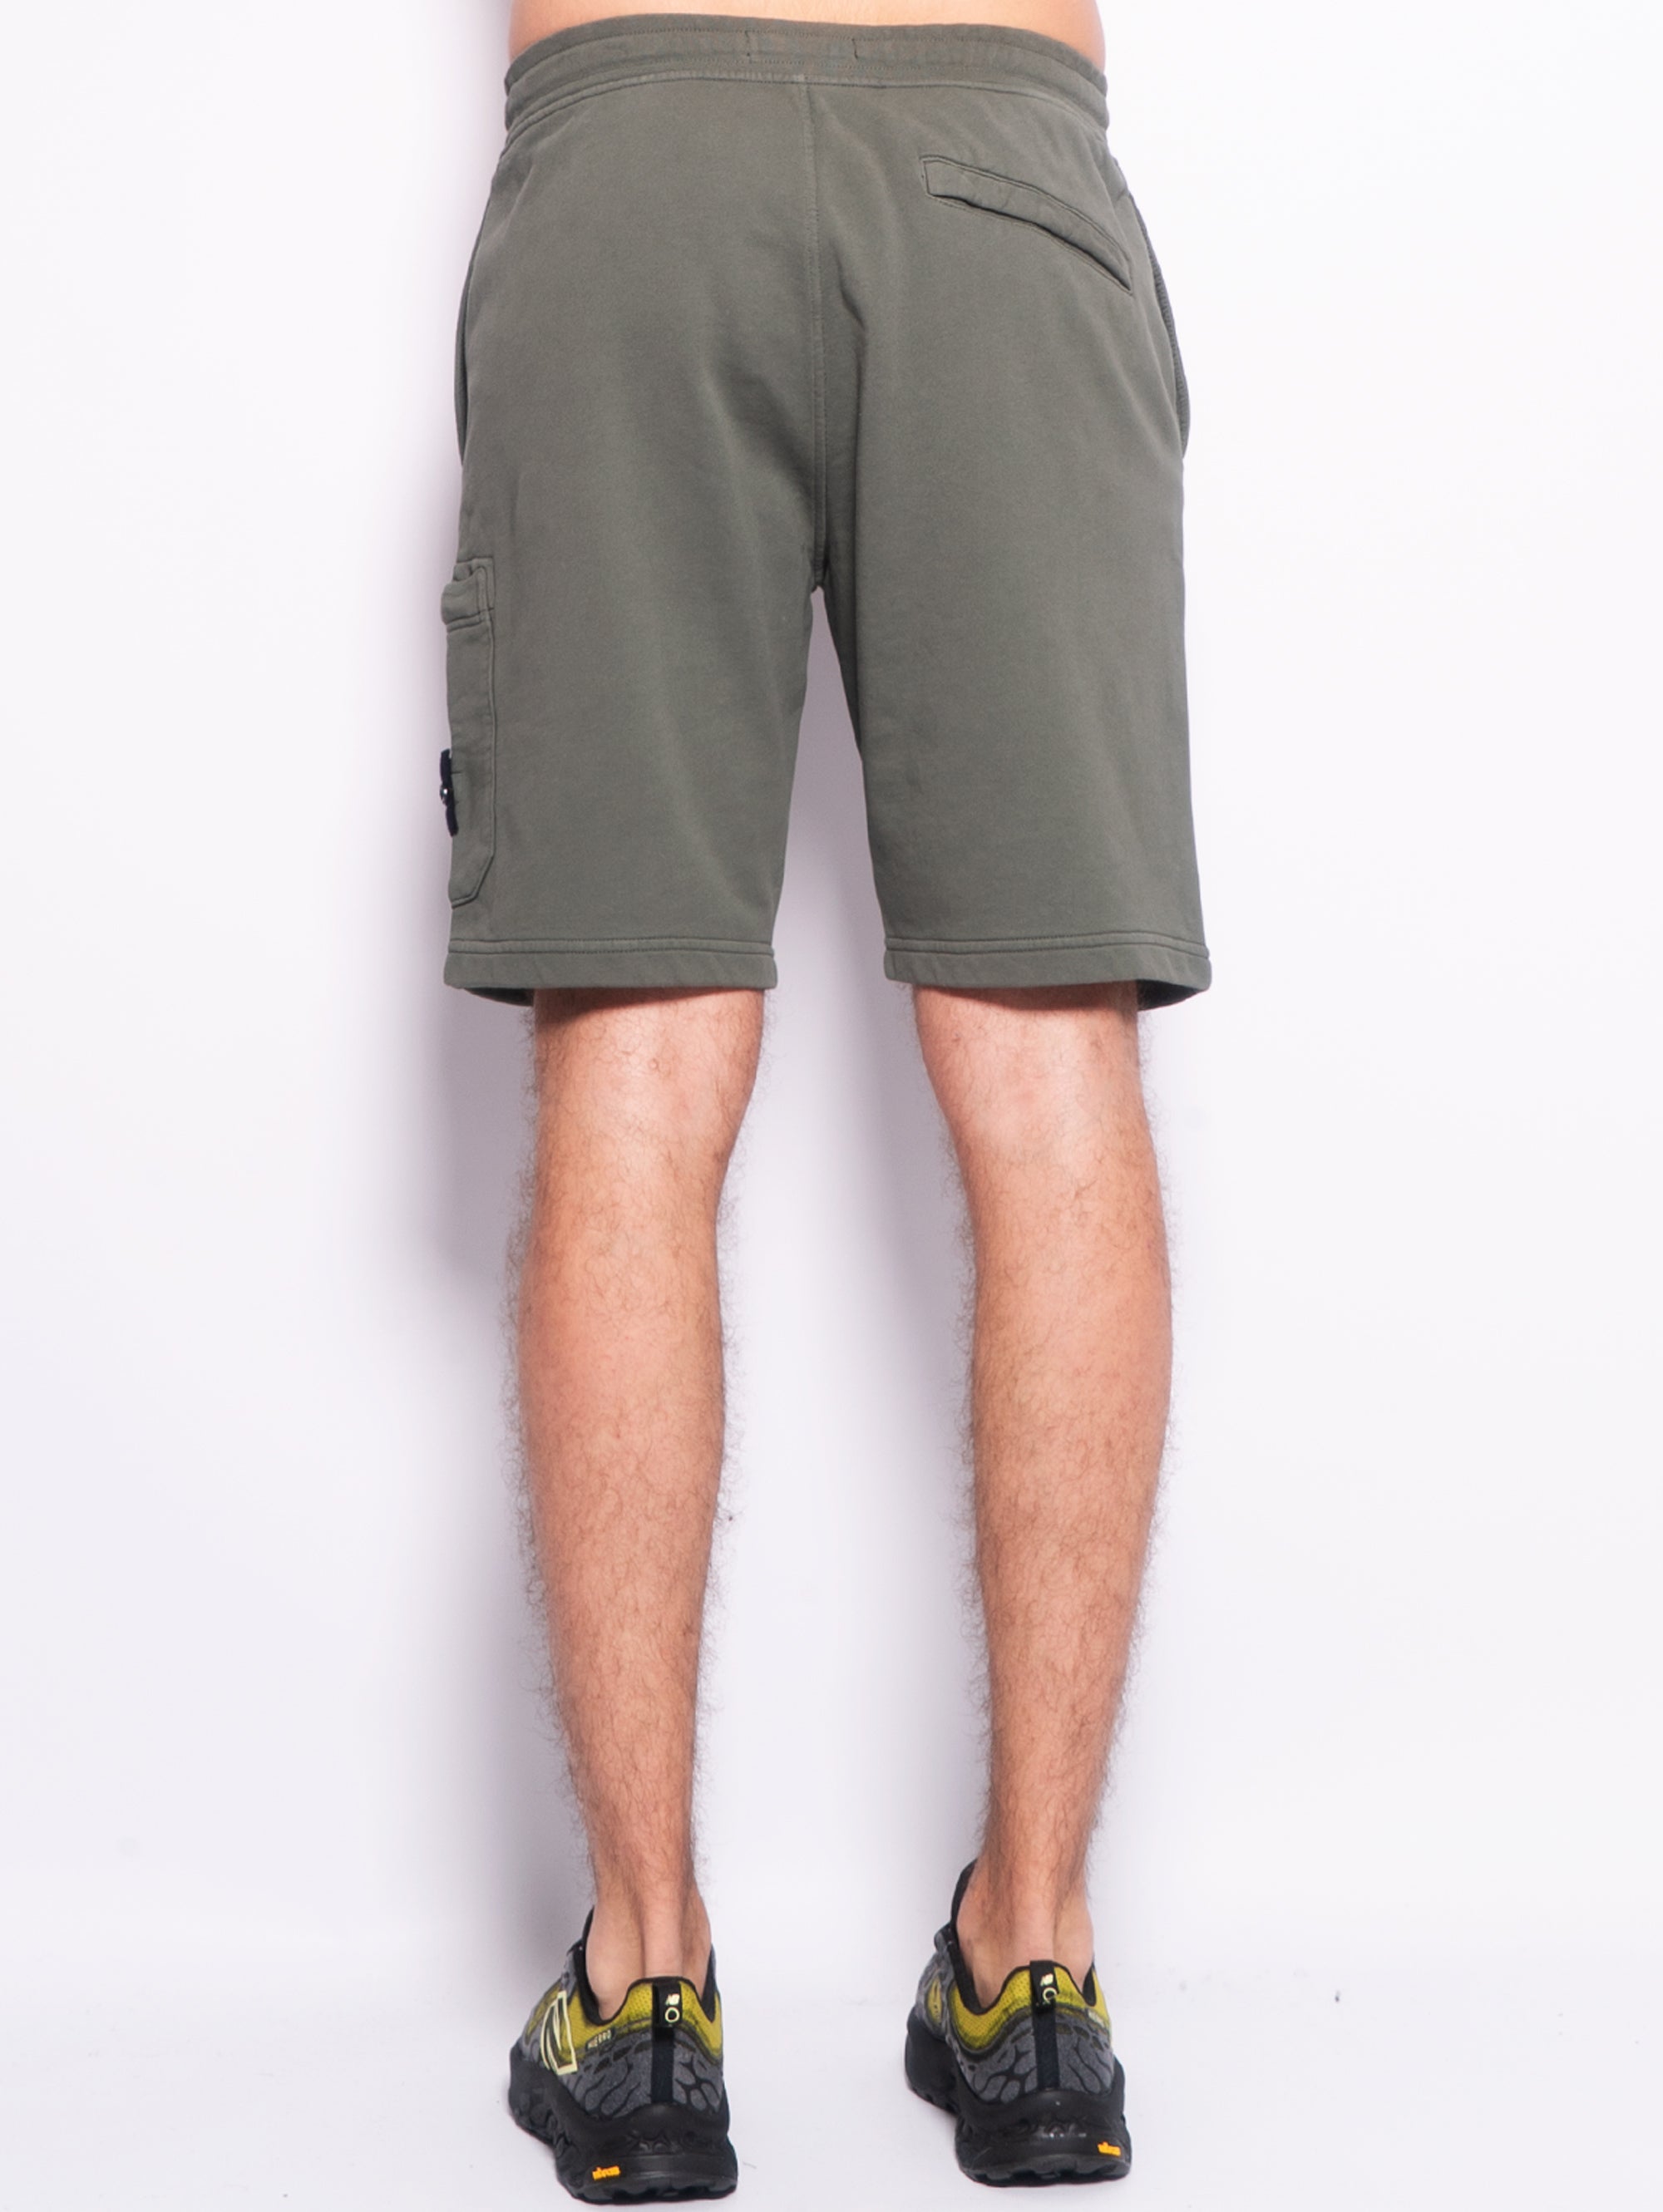 Bermuda shorts in moss fleece